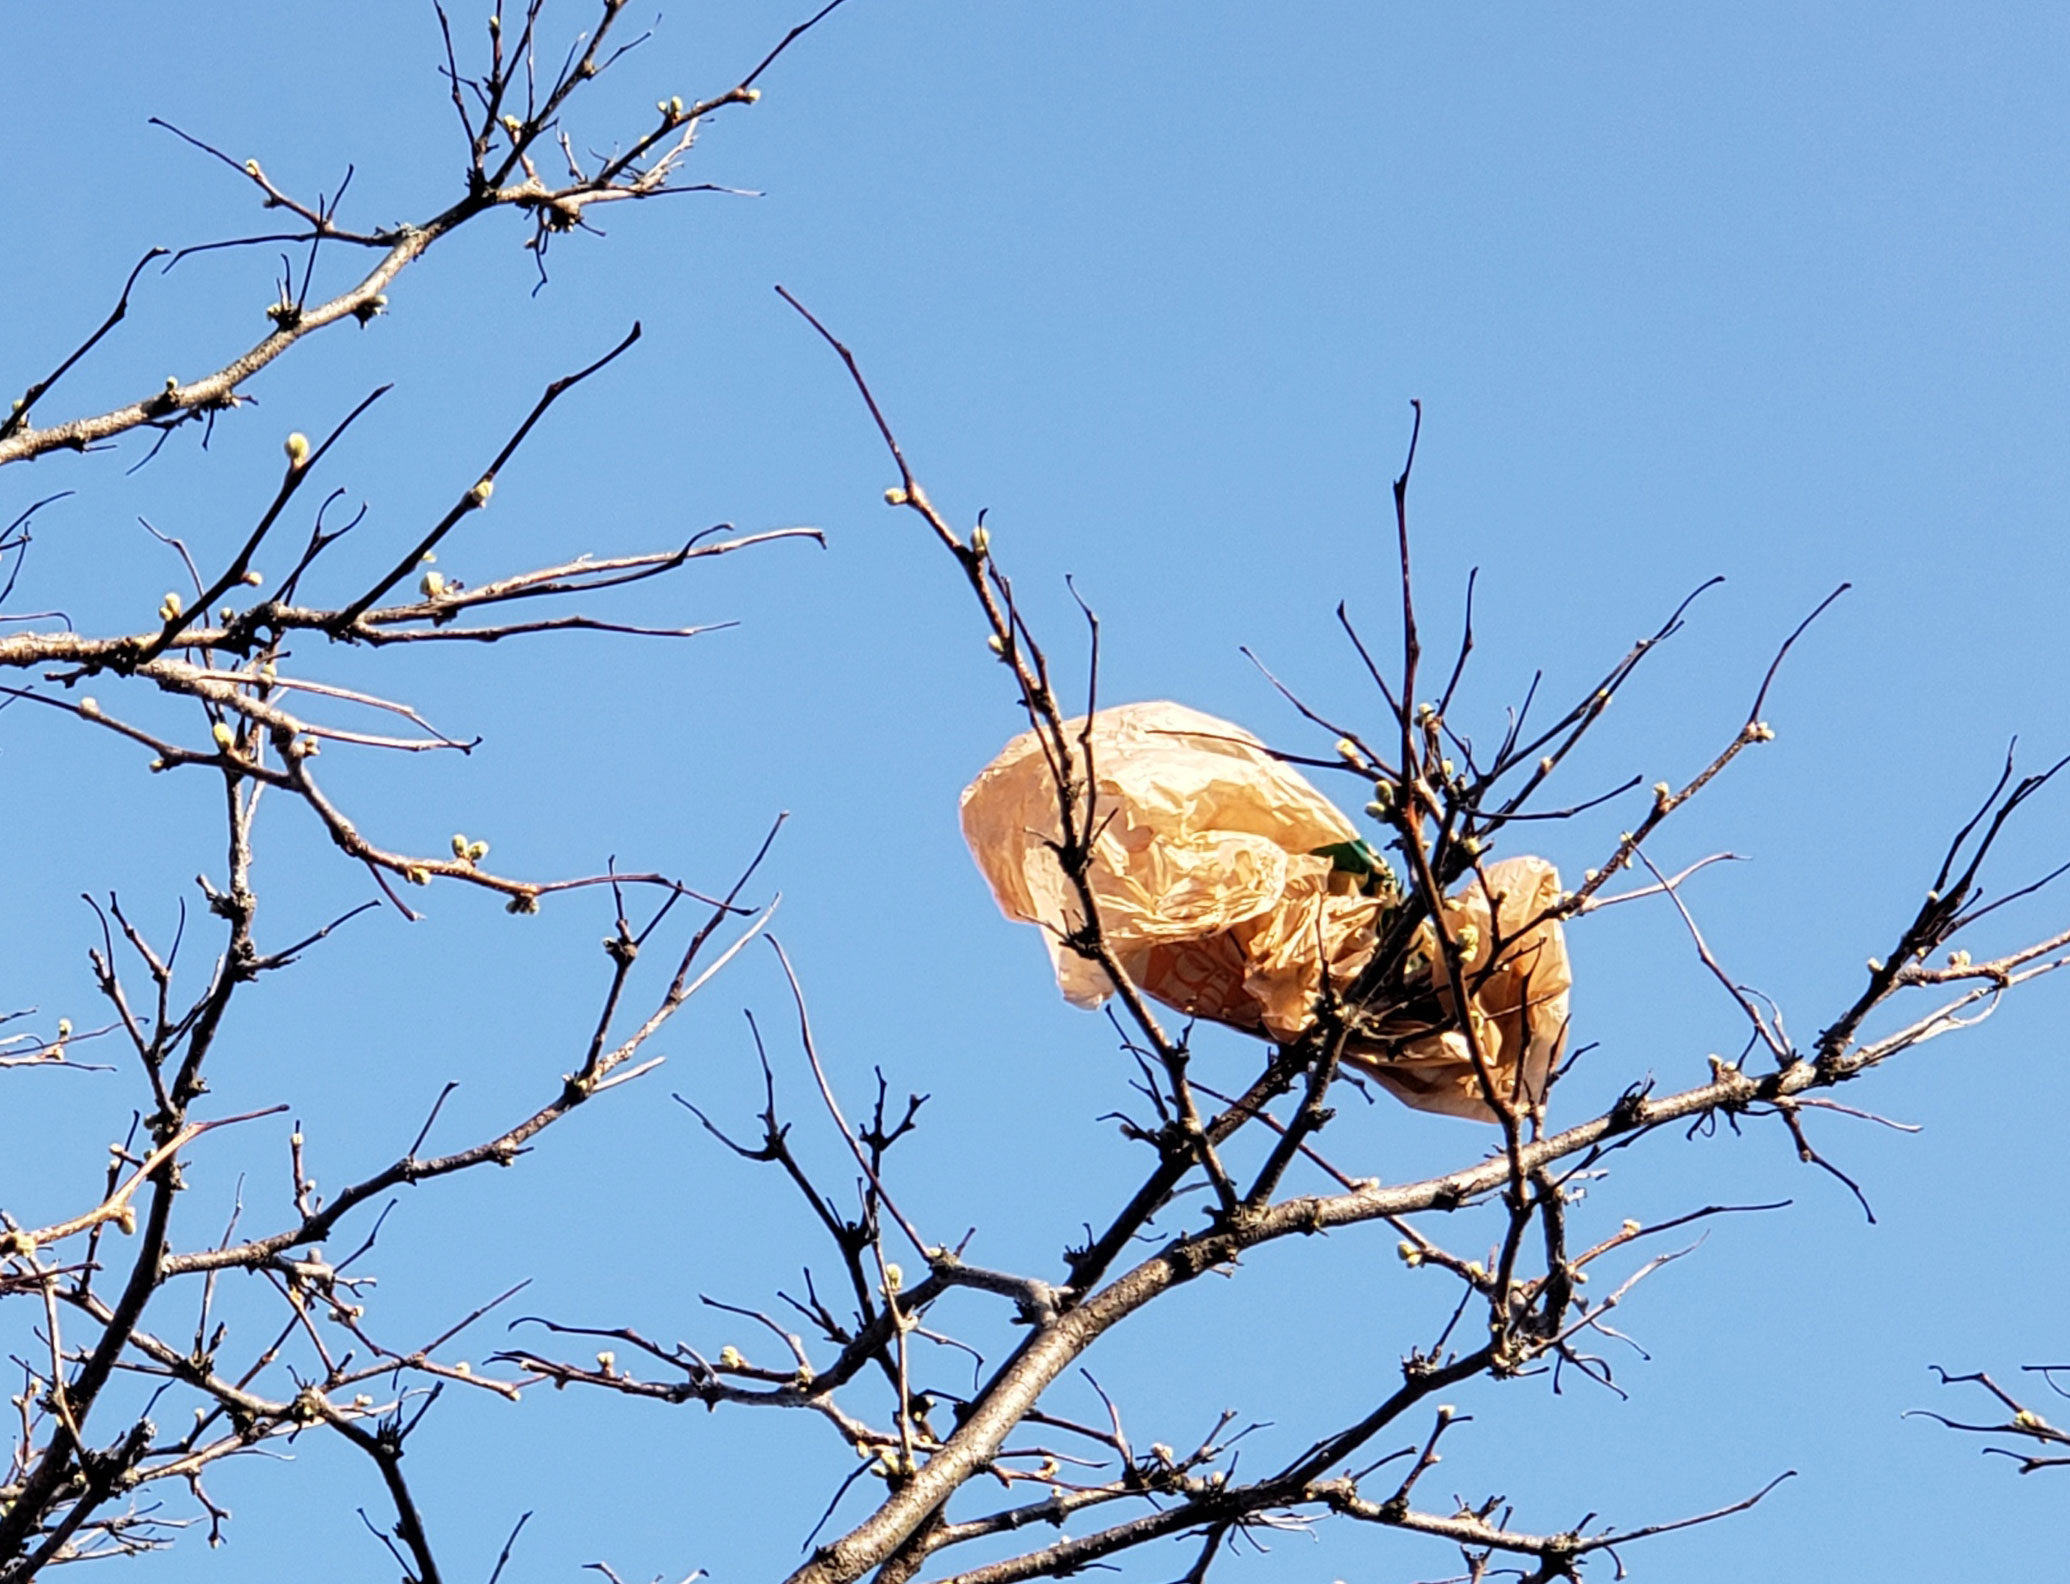 plastic bag in tree